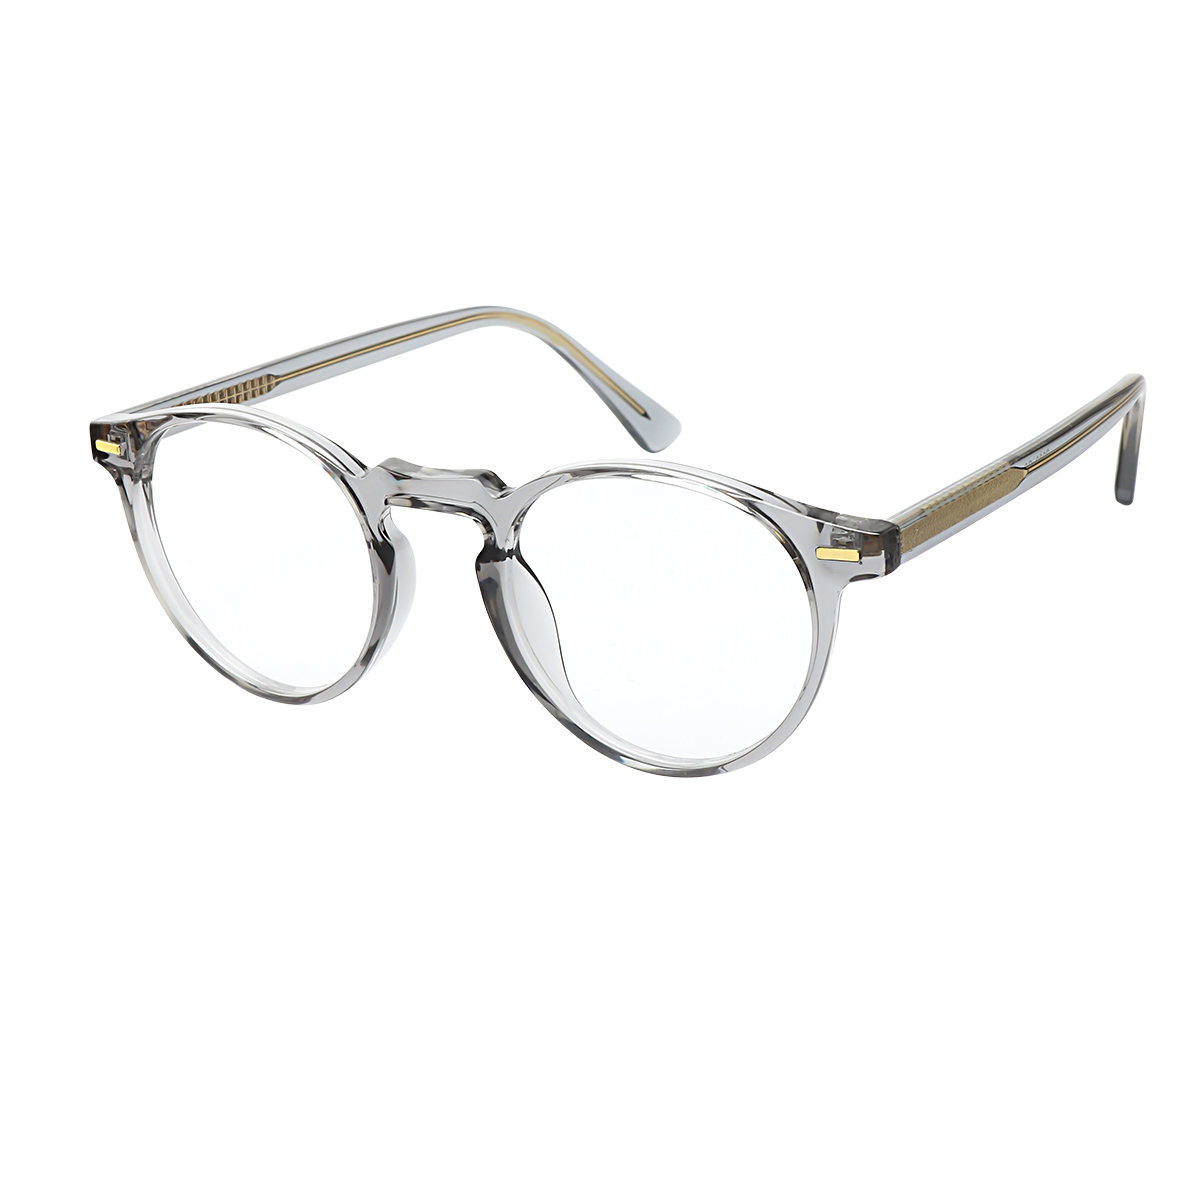 Georgina - Round Grey/Transparent Reading Glasses for Women